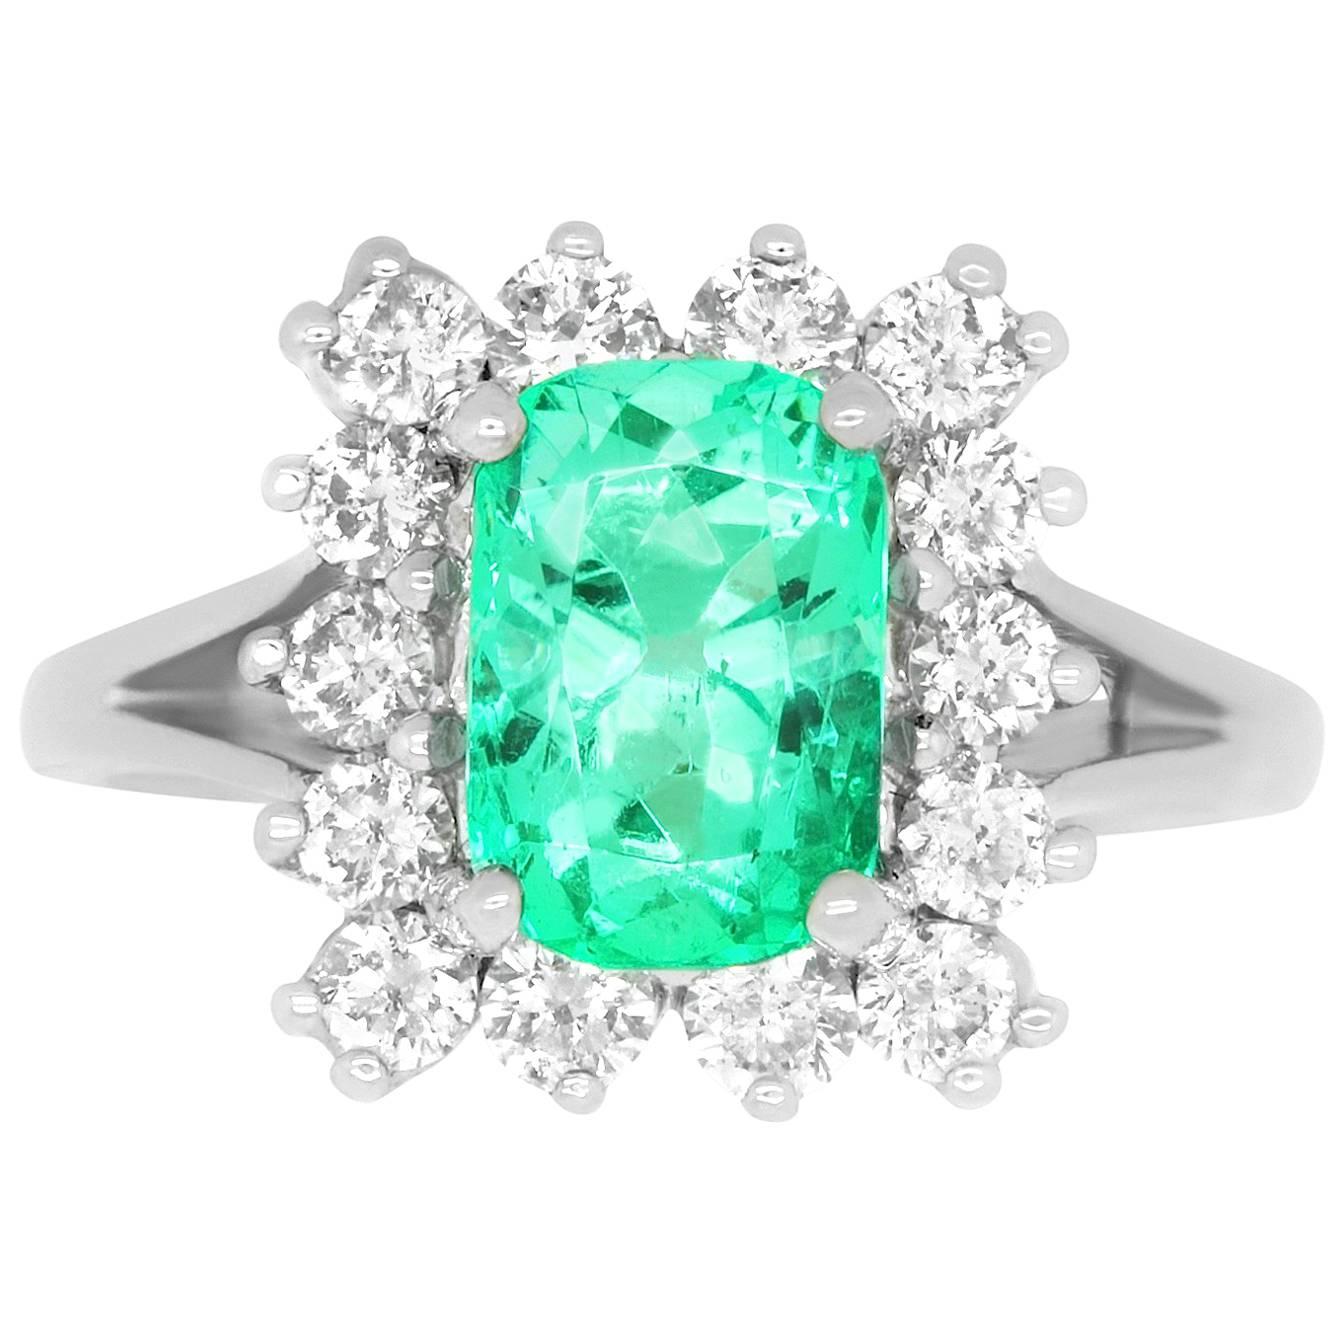 2.14 Carat Emerald Cut Emerald and White Diamond Ring